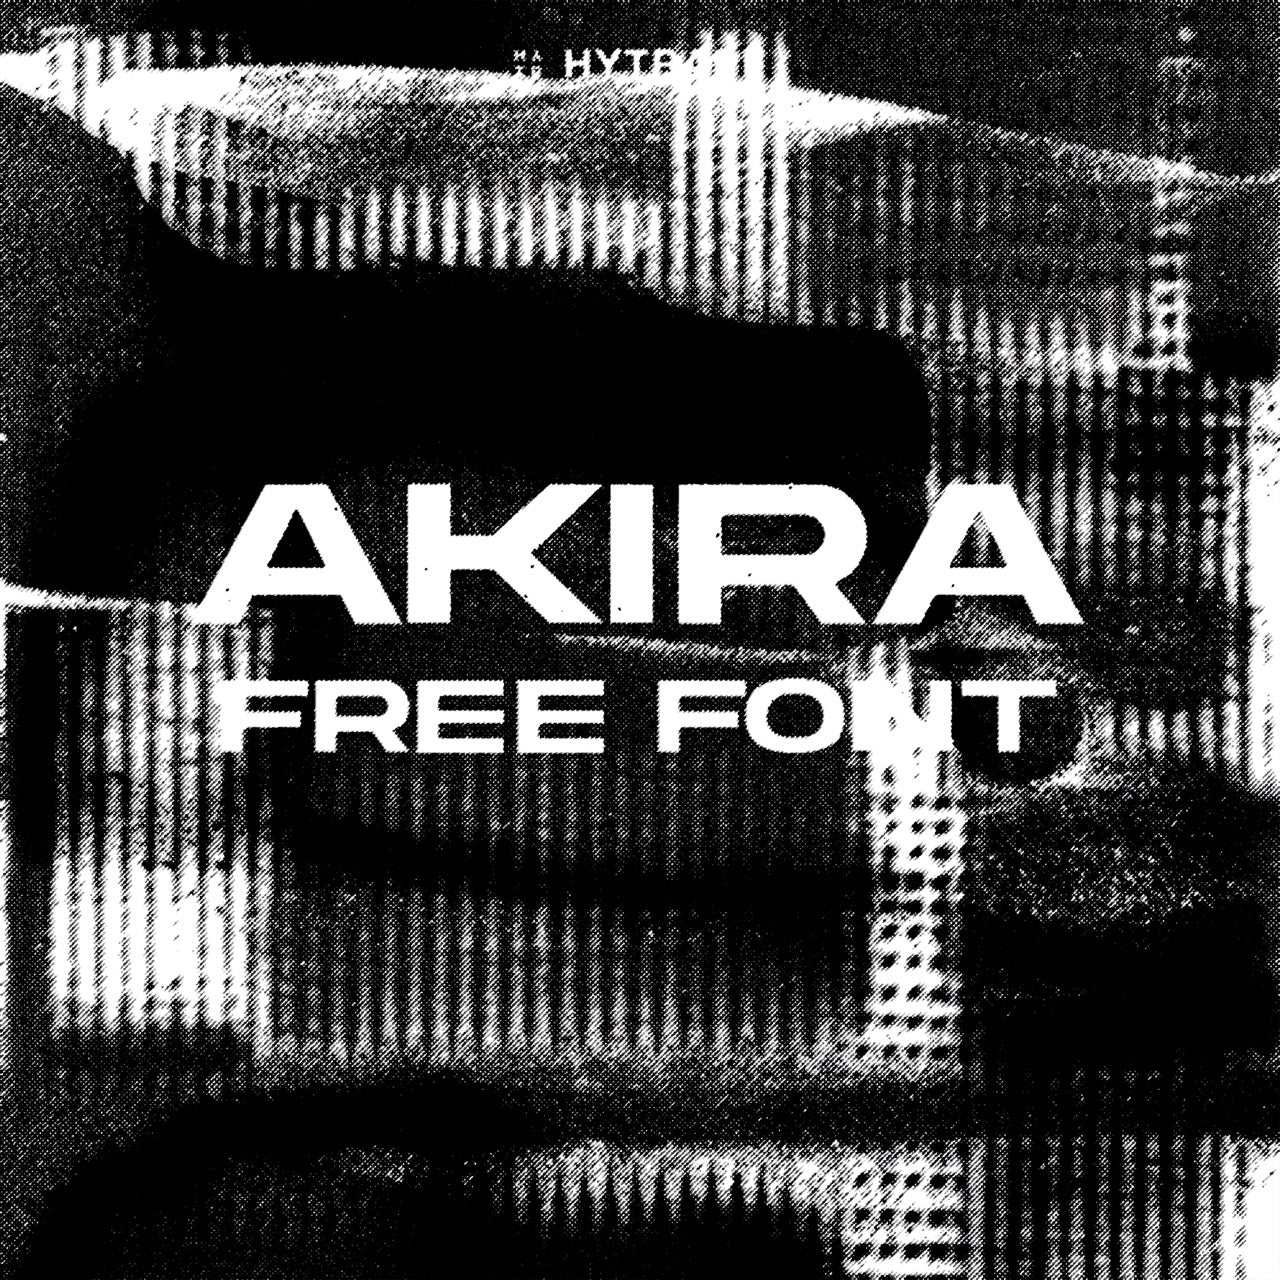 AKIRA FONT (FREE) HYTRAPE